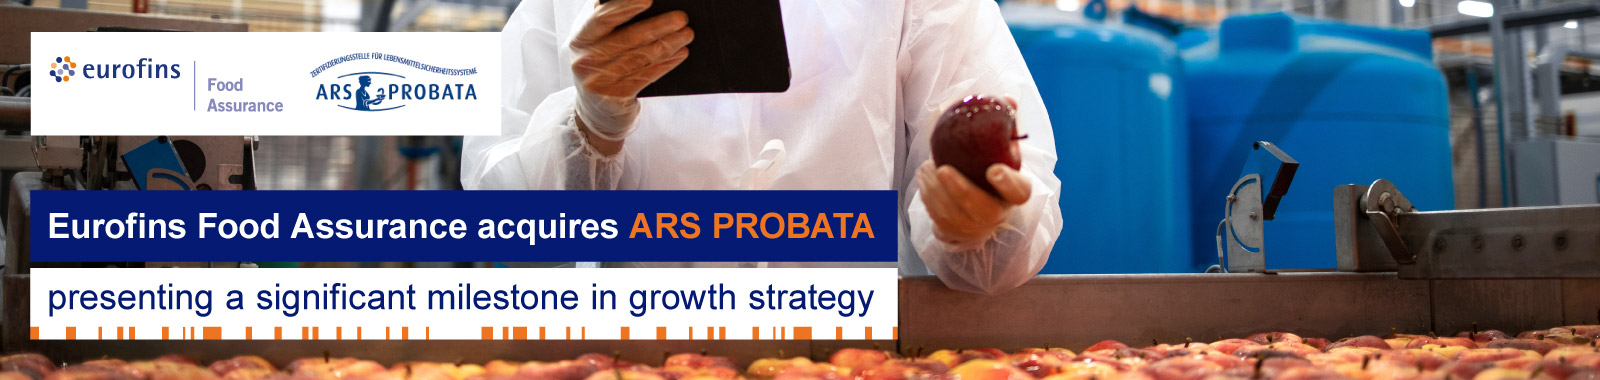 FA - Eurofins Food Assurance acquires ARS PROBATA